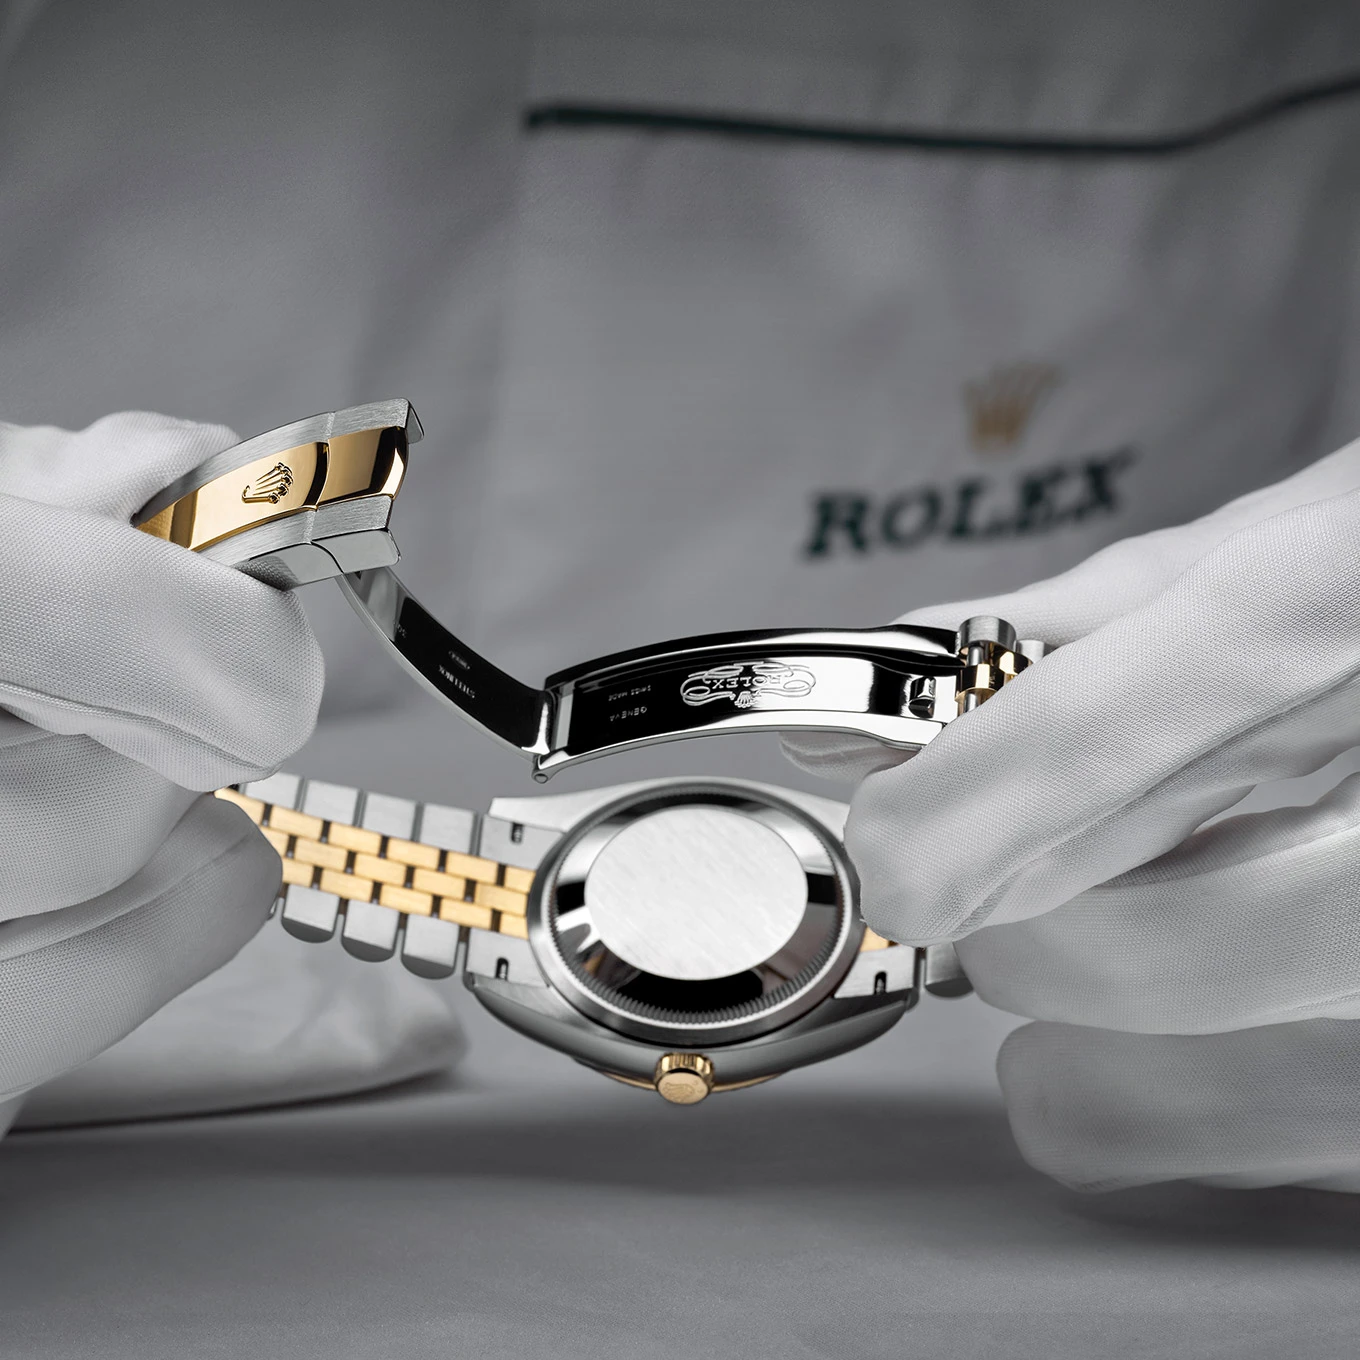 Servicing your Rolex